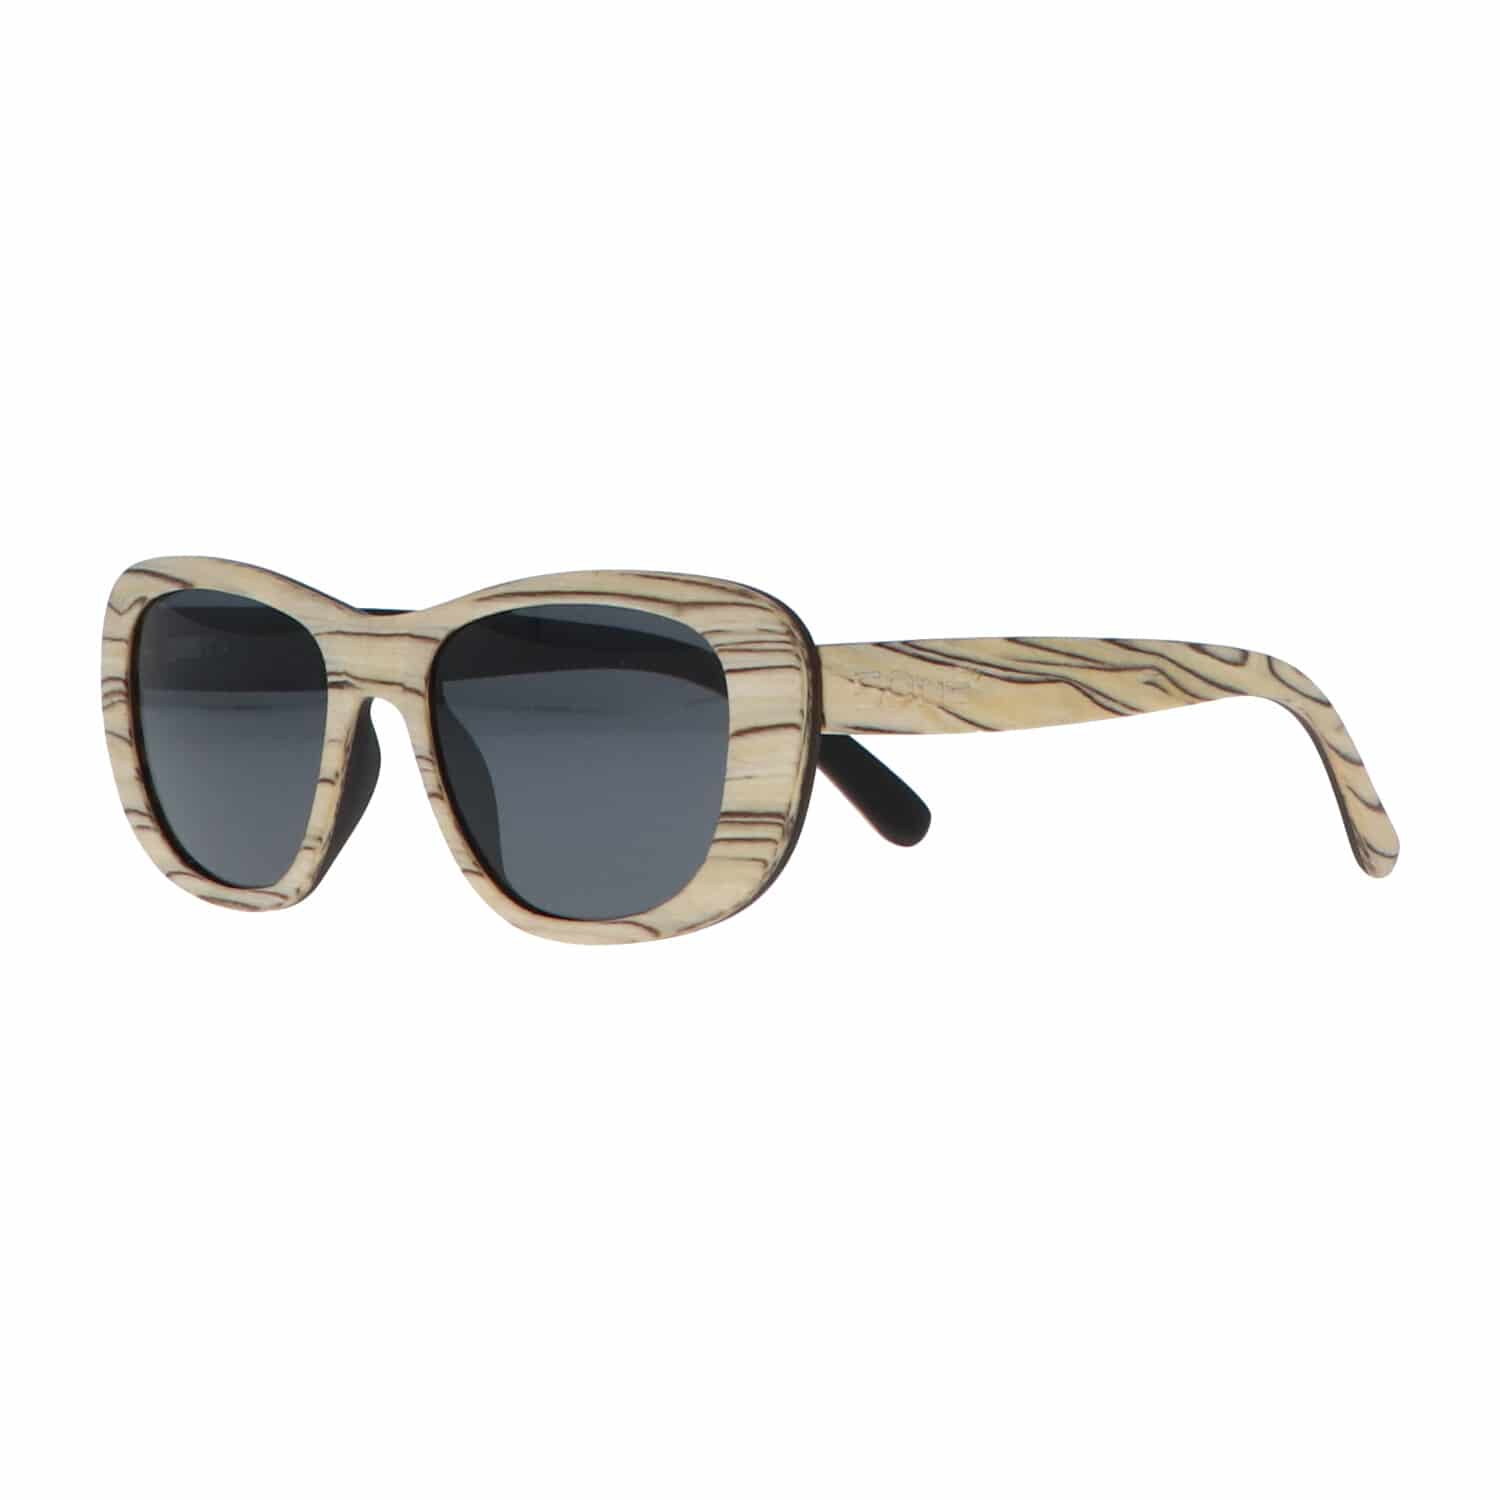 5one® Siena White striped - houten dames zonnebril met grijze lens